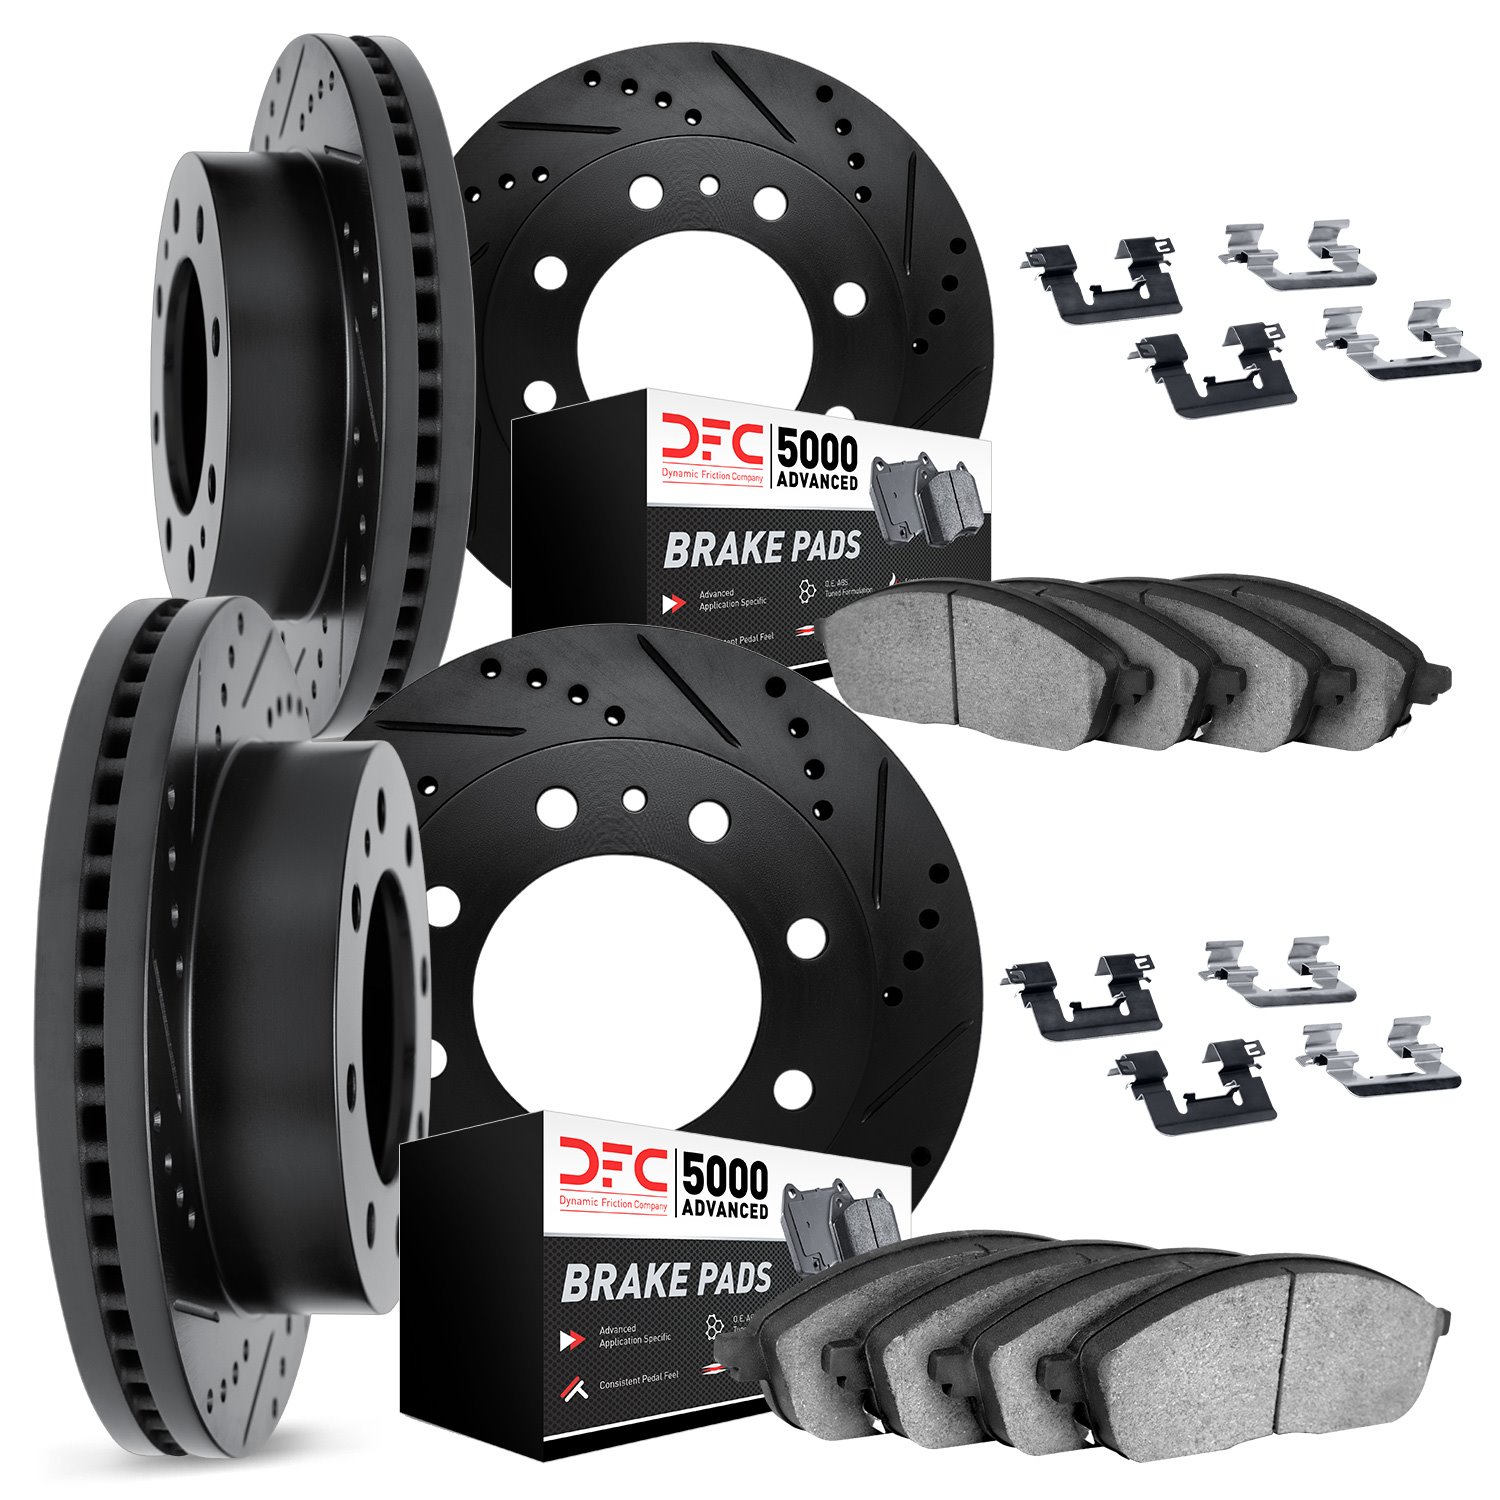 8514-40272 Drilled/Slotted Brake Rotors w/5000 Advanced Brake Pads Kit & Hardware [Black], Fits Select Mopar, Position: Front an